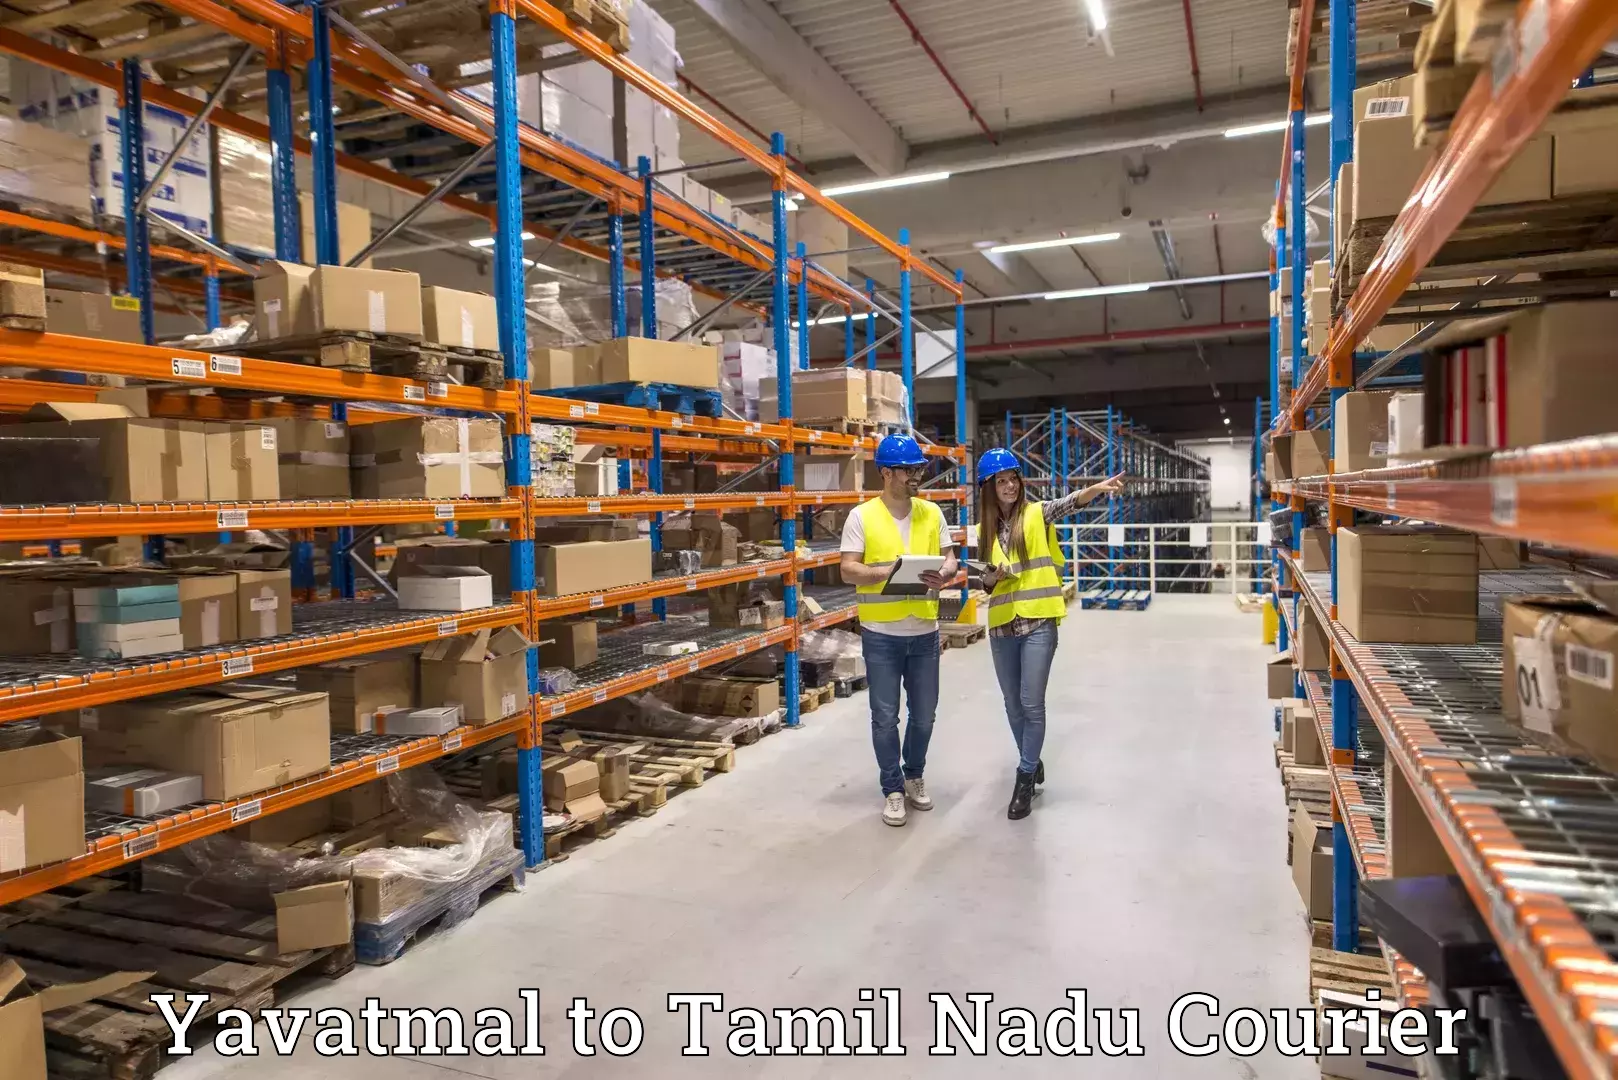 Courier service innovation Yavatmal to Chennai Port